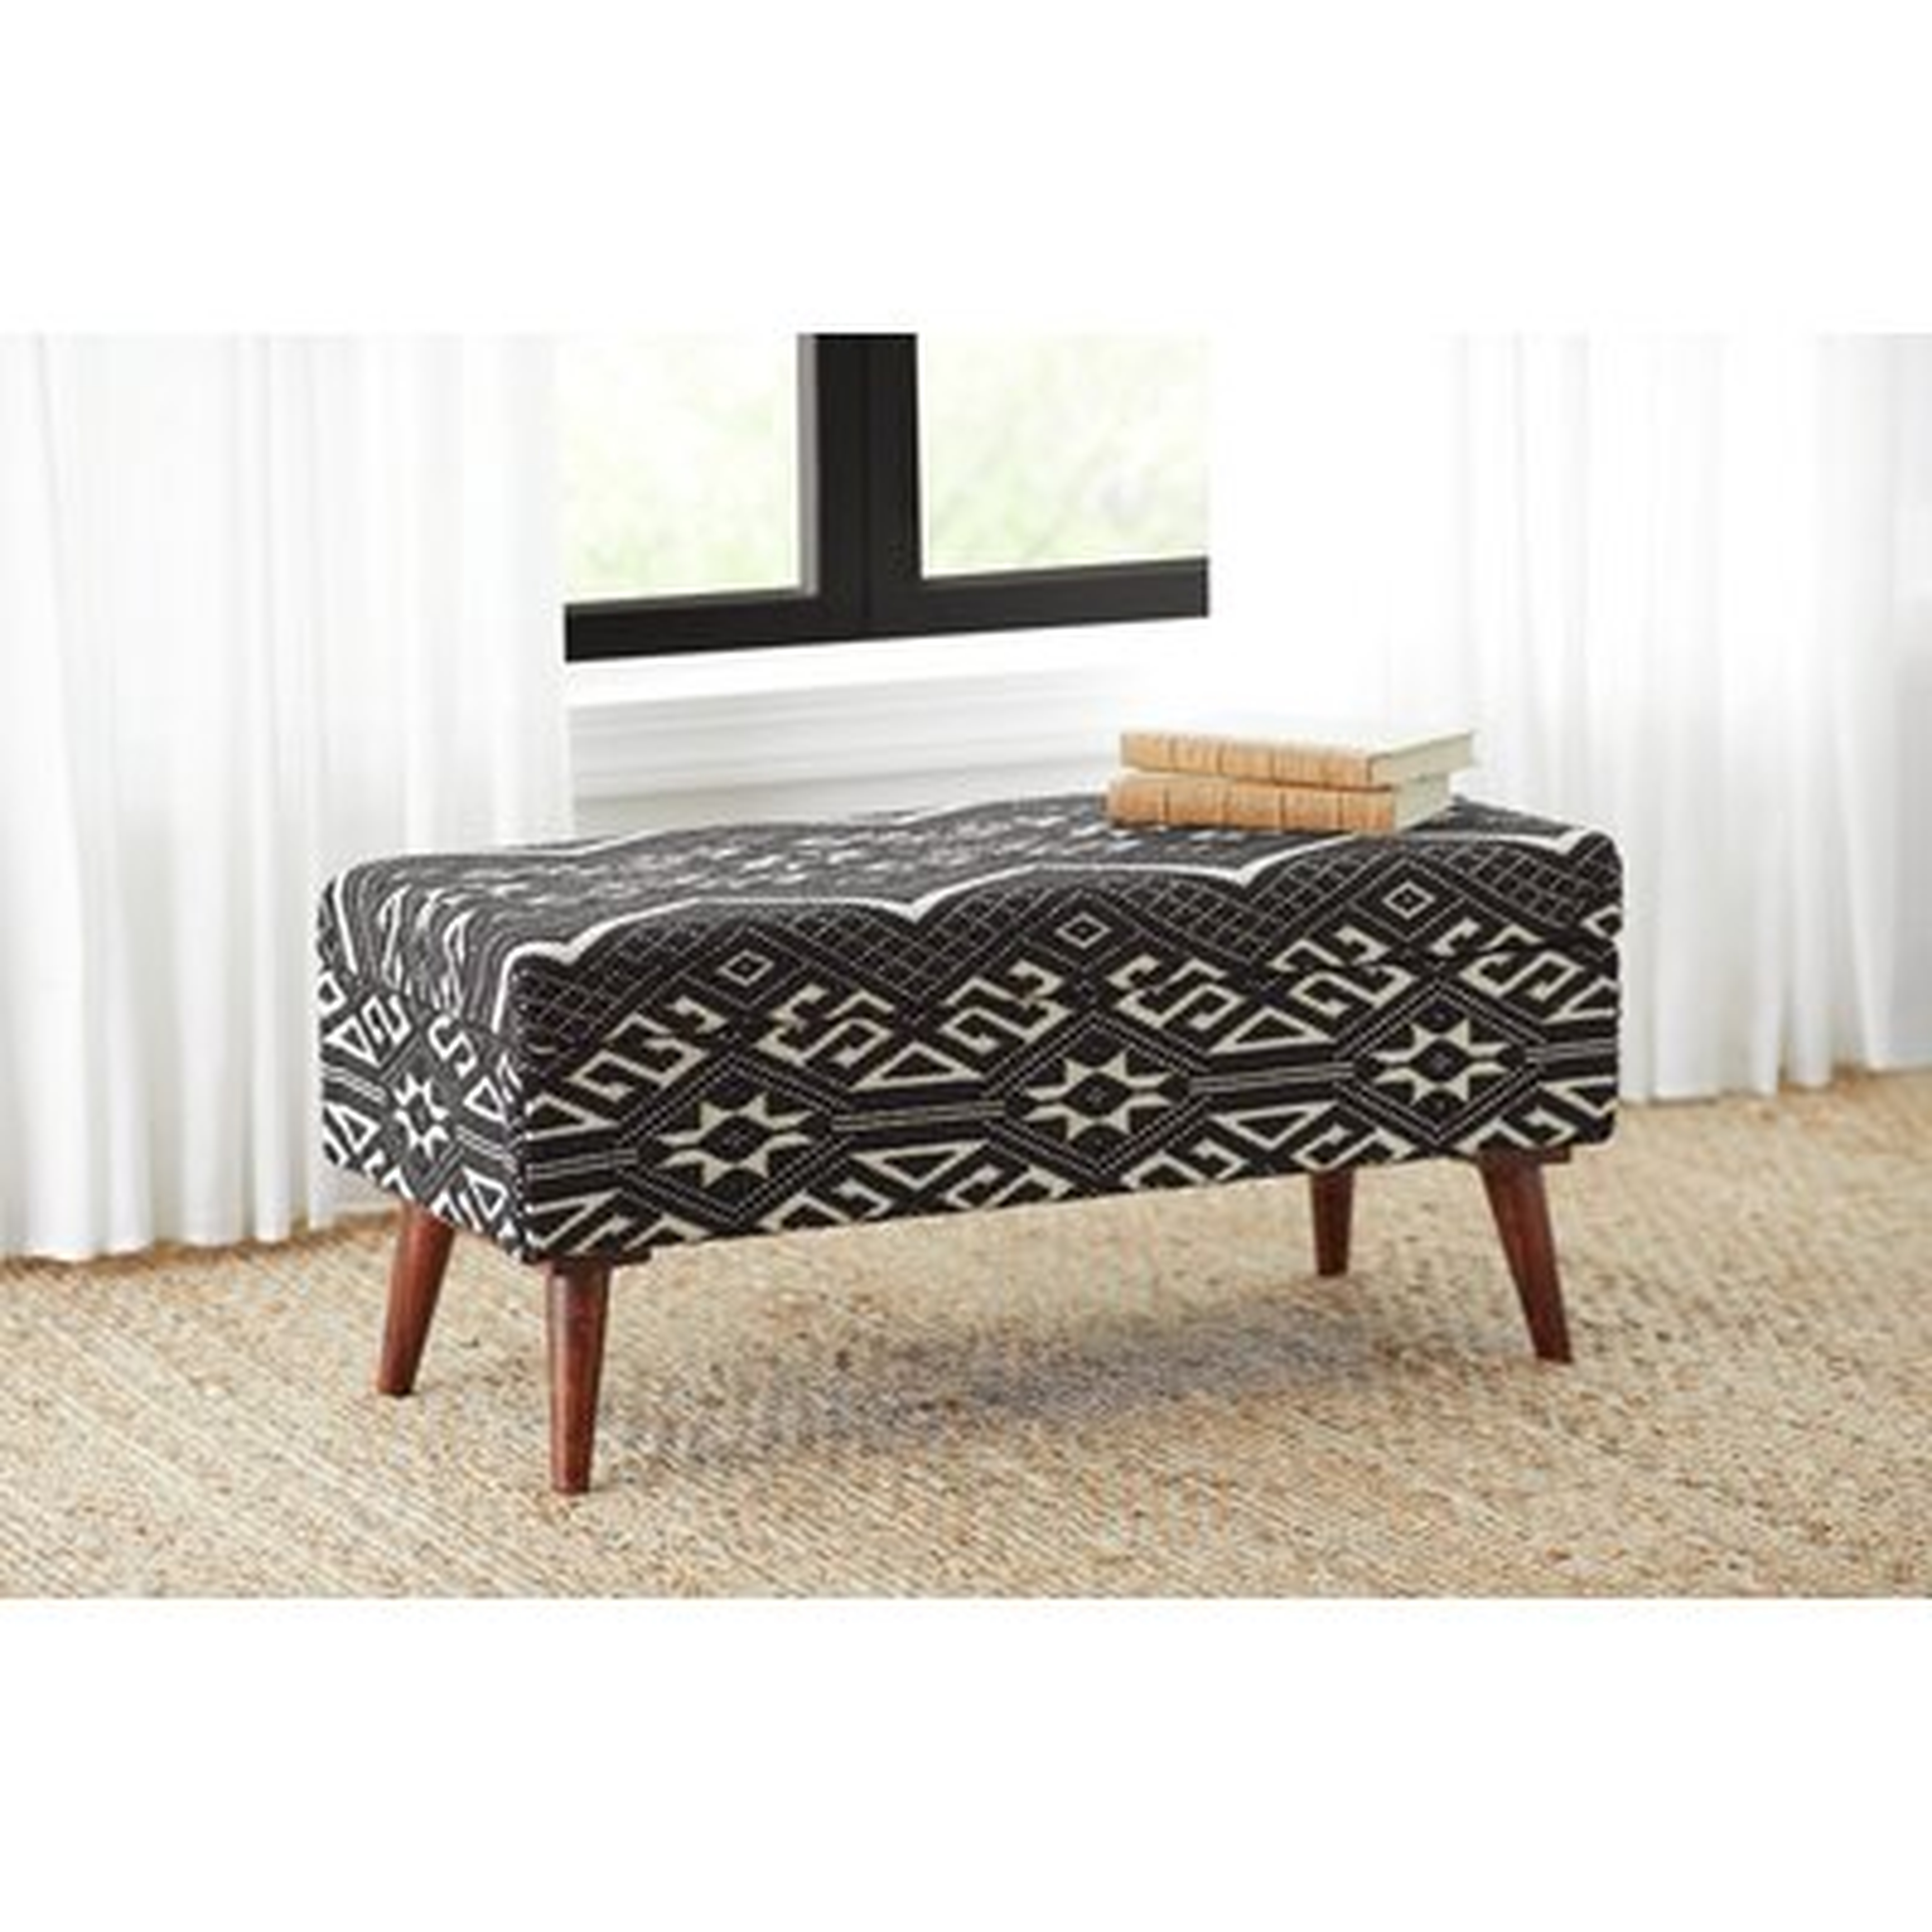 Upholstered Bench Black And White - Wayfair